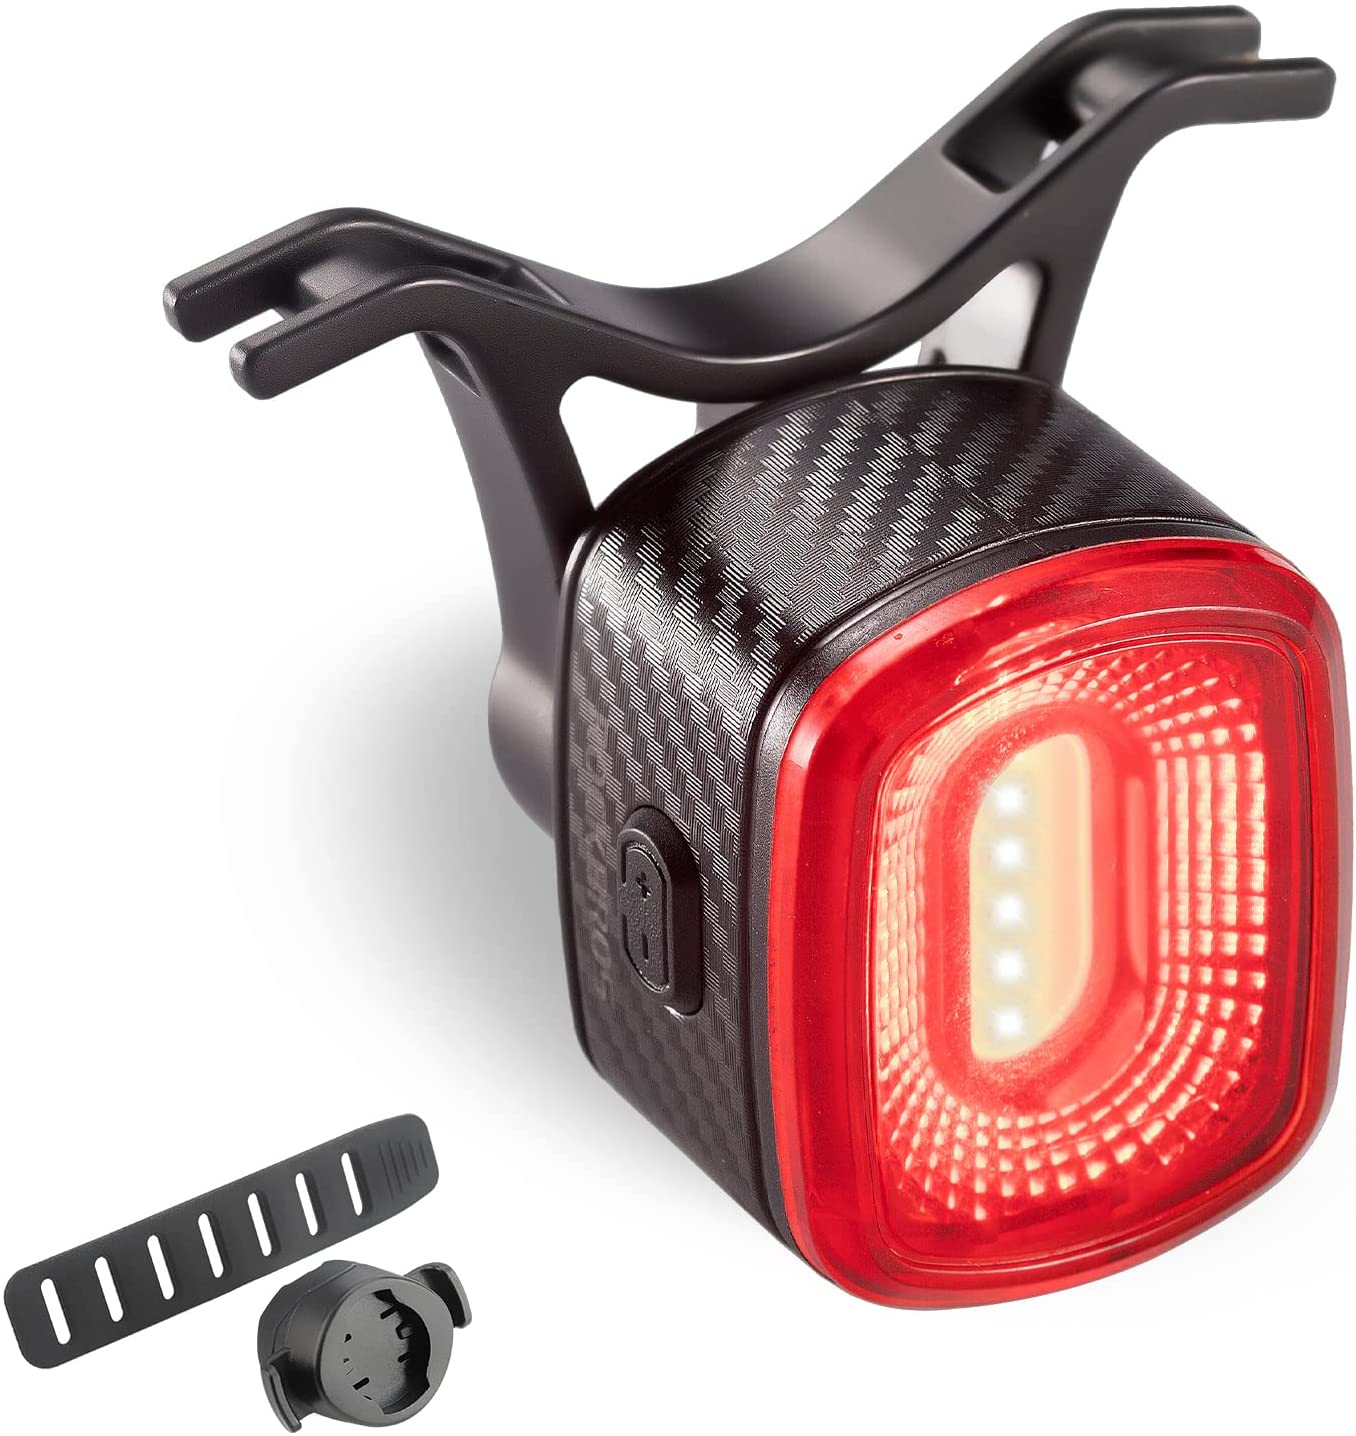 ROCKBROS Smart Bike Tail Light